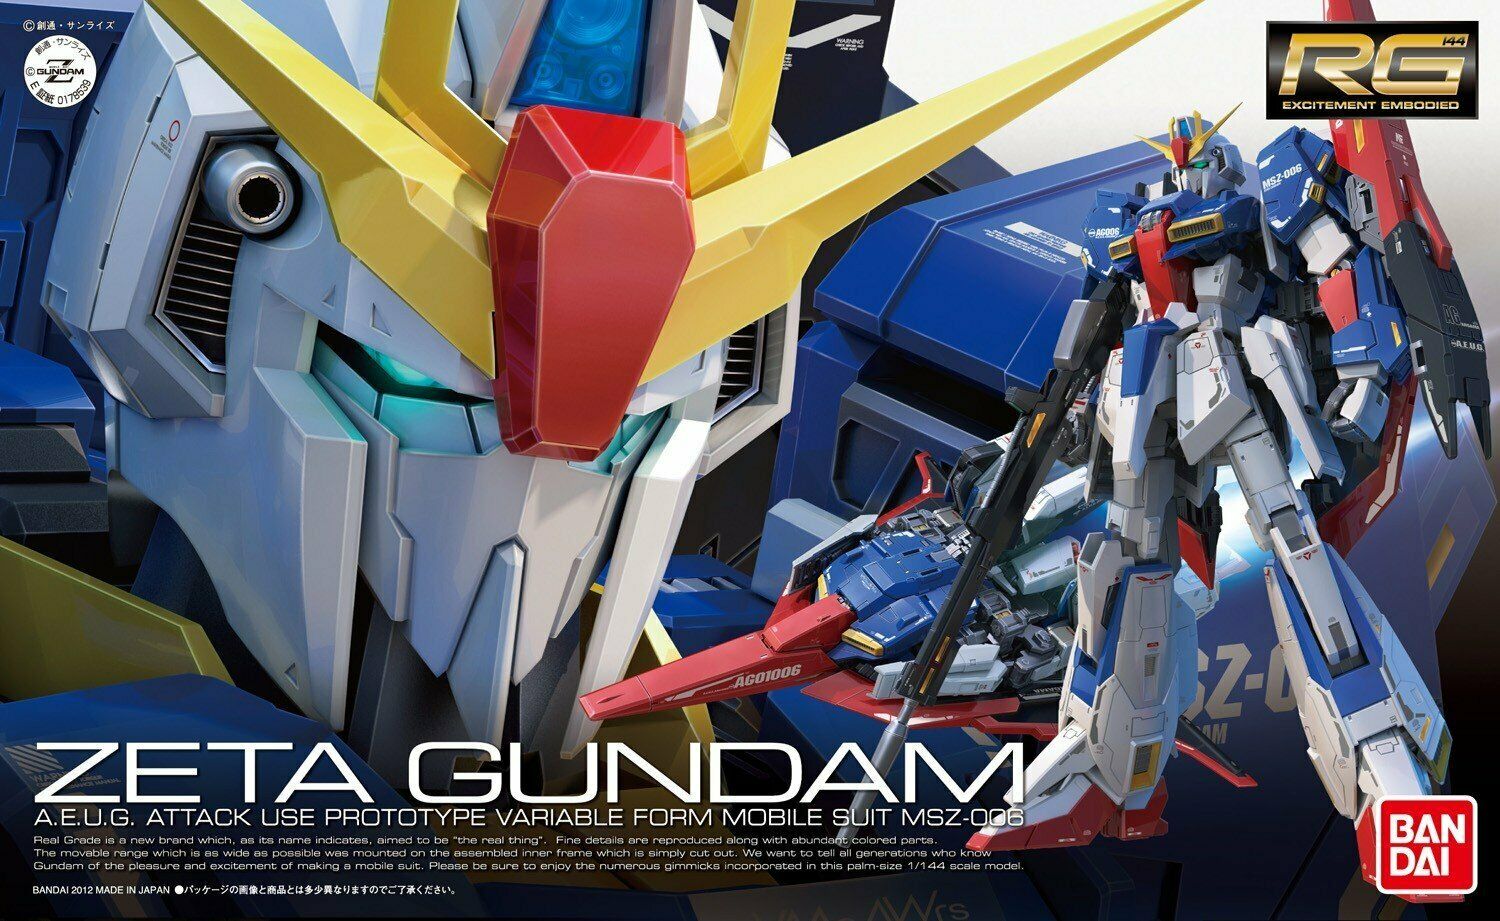 RG #10 Zeta Gundam